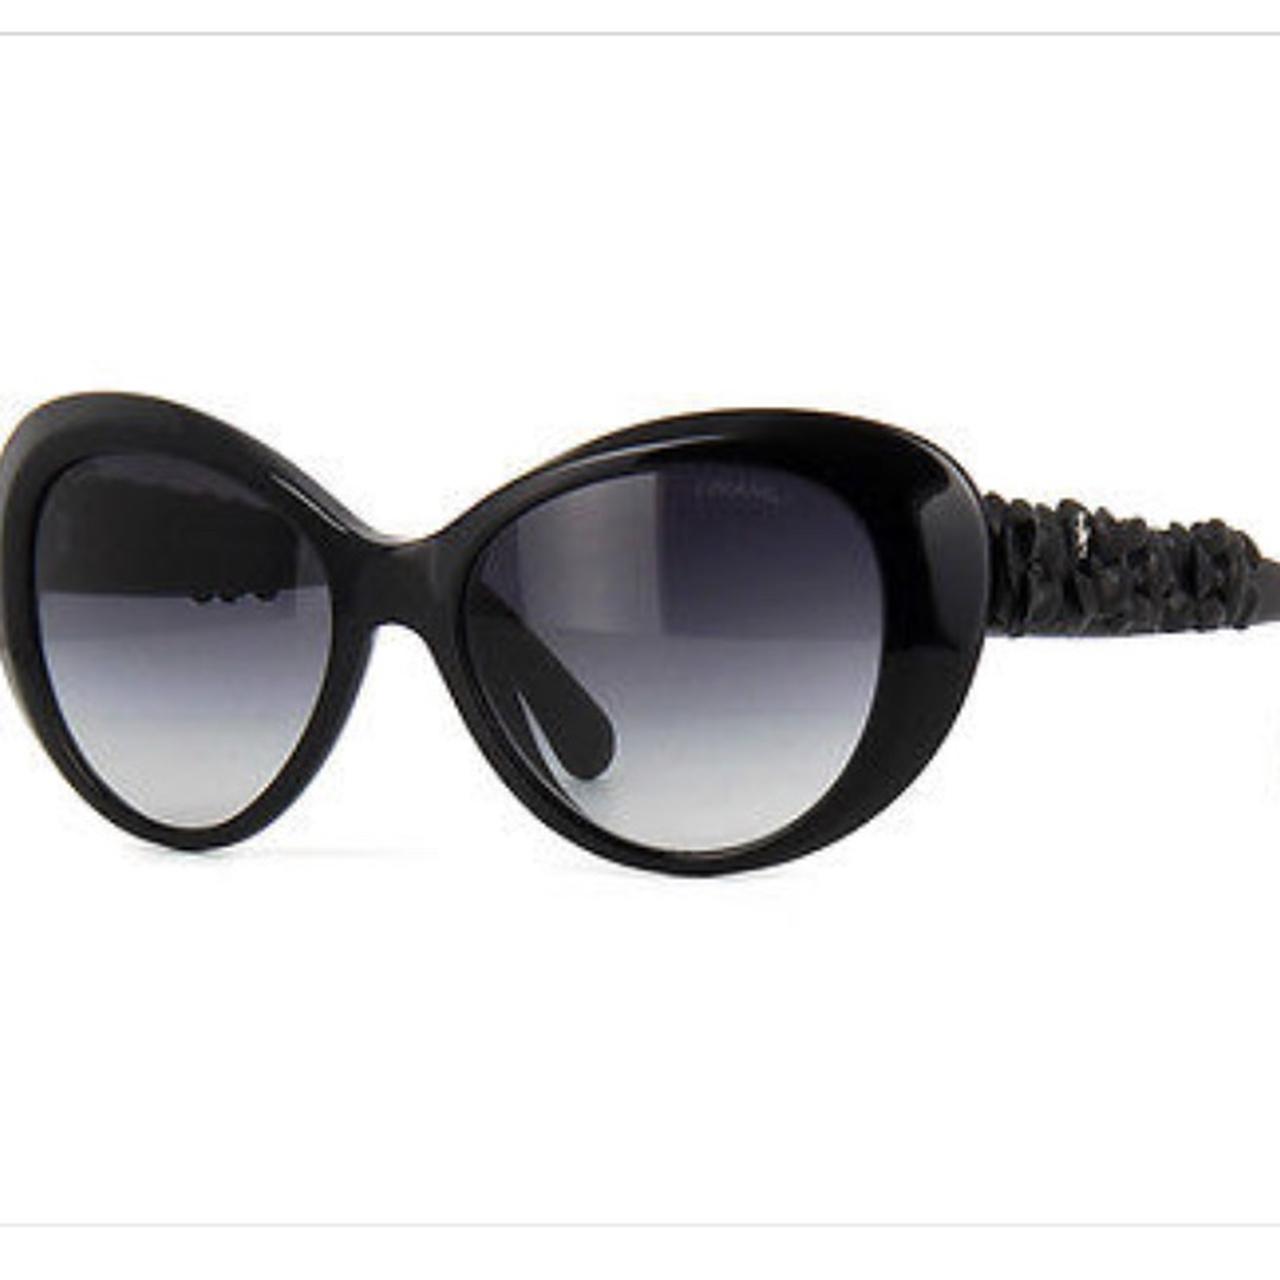 Chanel Camellia sunglasses Chanel sunglasses - Depop